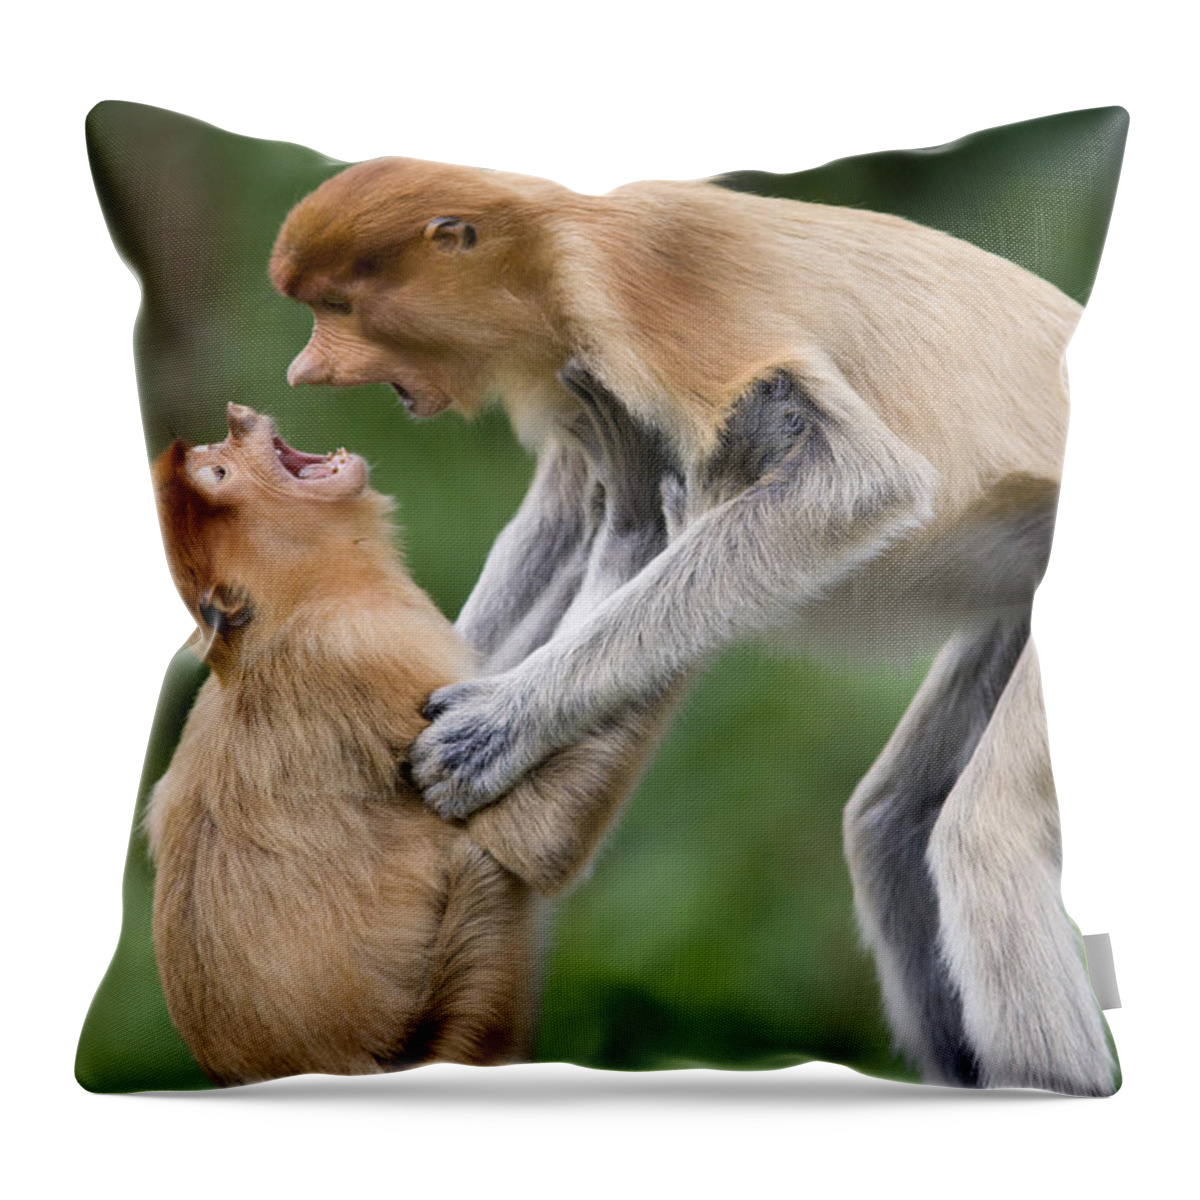 00479407 Throw Pillow featuring the photograph Proboscis Monkey Juveniles Playing by Suzi Eszterhas